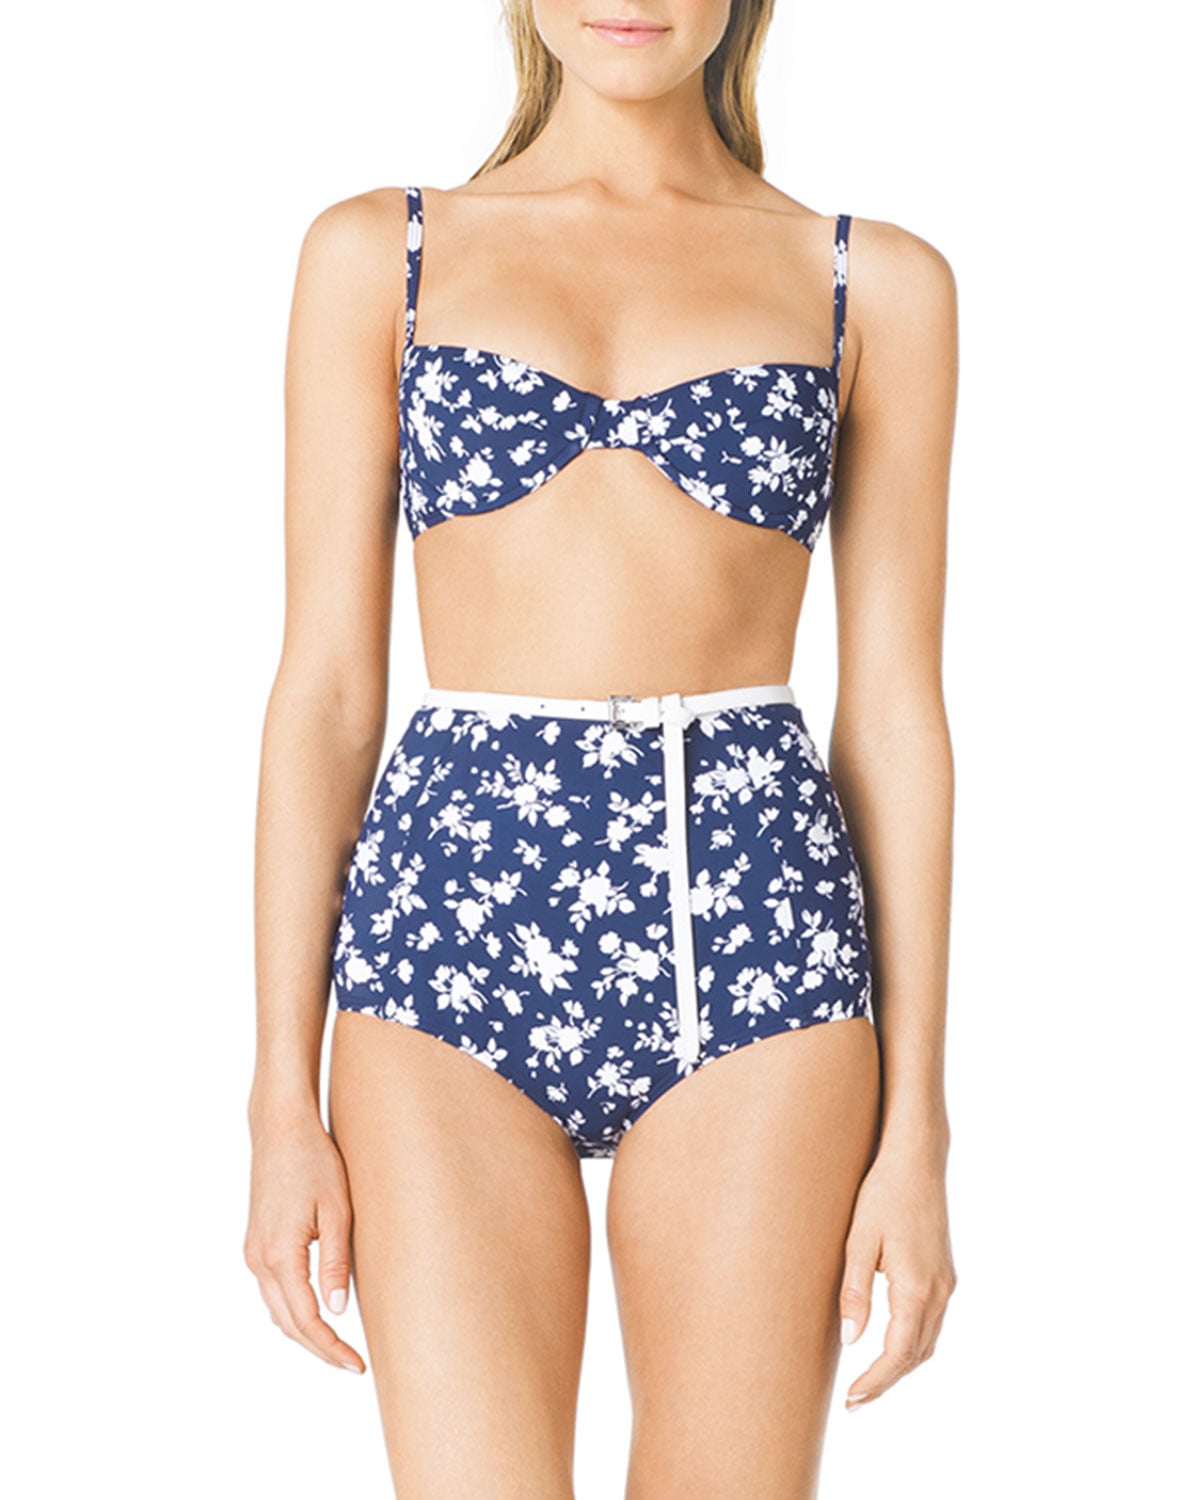 Michael Kors Retro-Style Bikini | Your Summer Wardrobe Is About to Sizzle |  POPSUGAR Fashion Photo 2